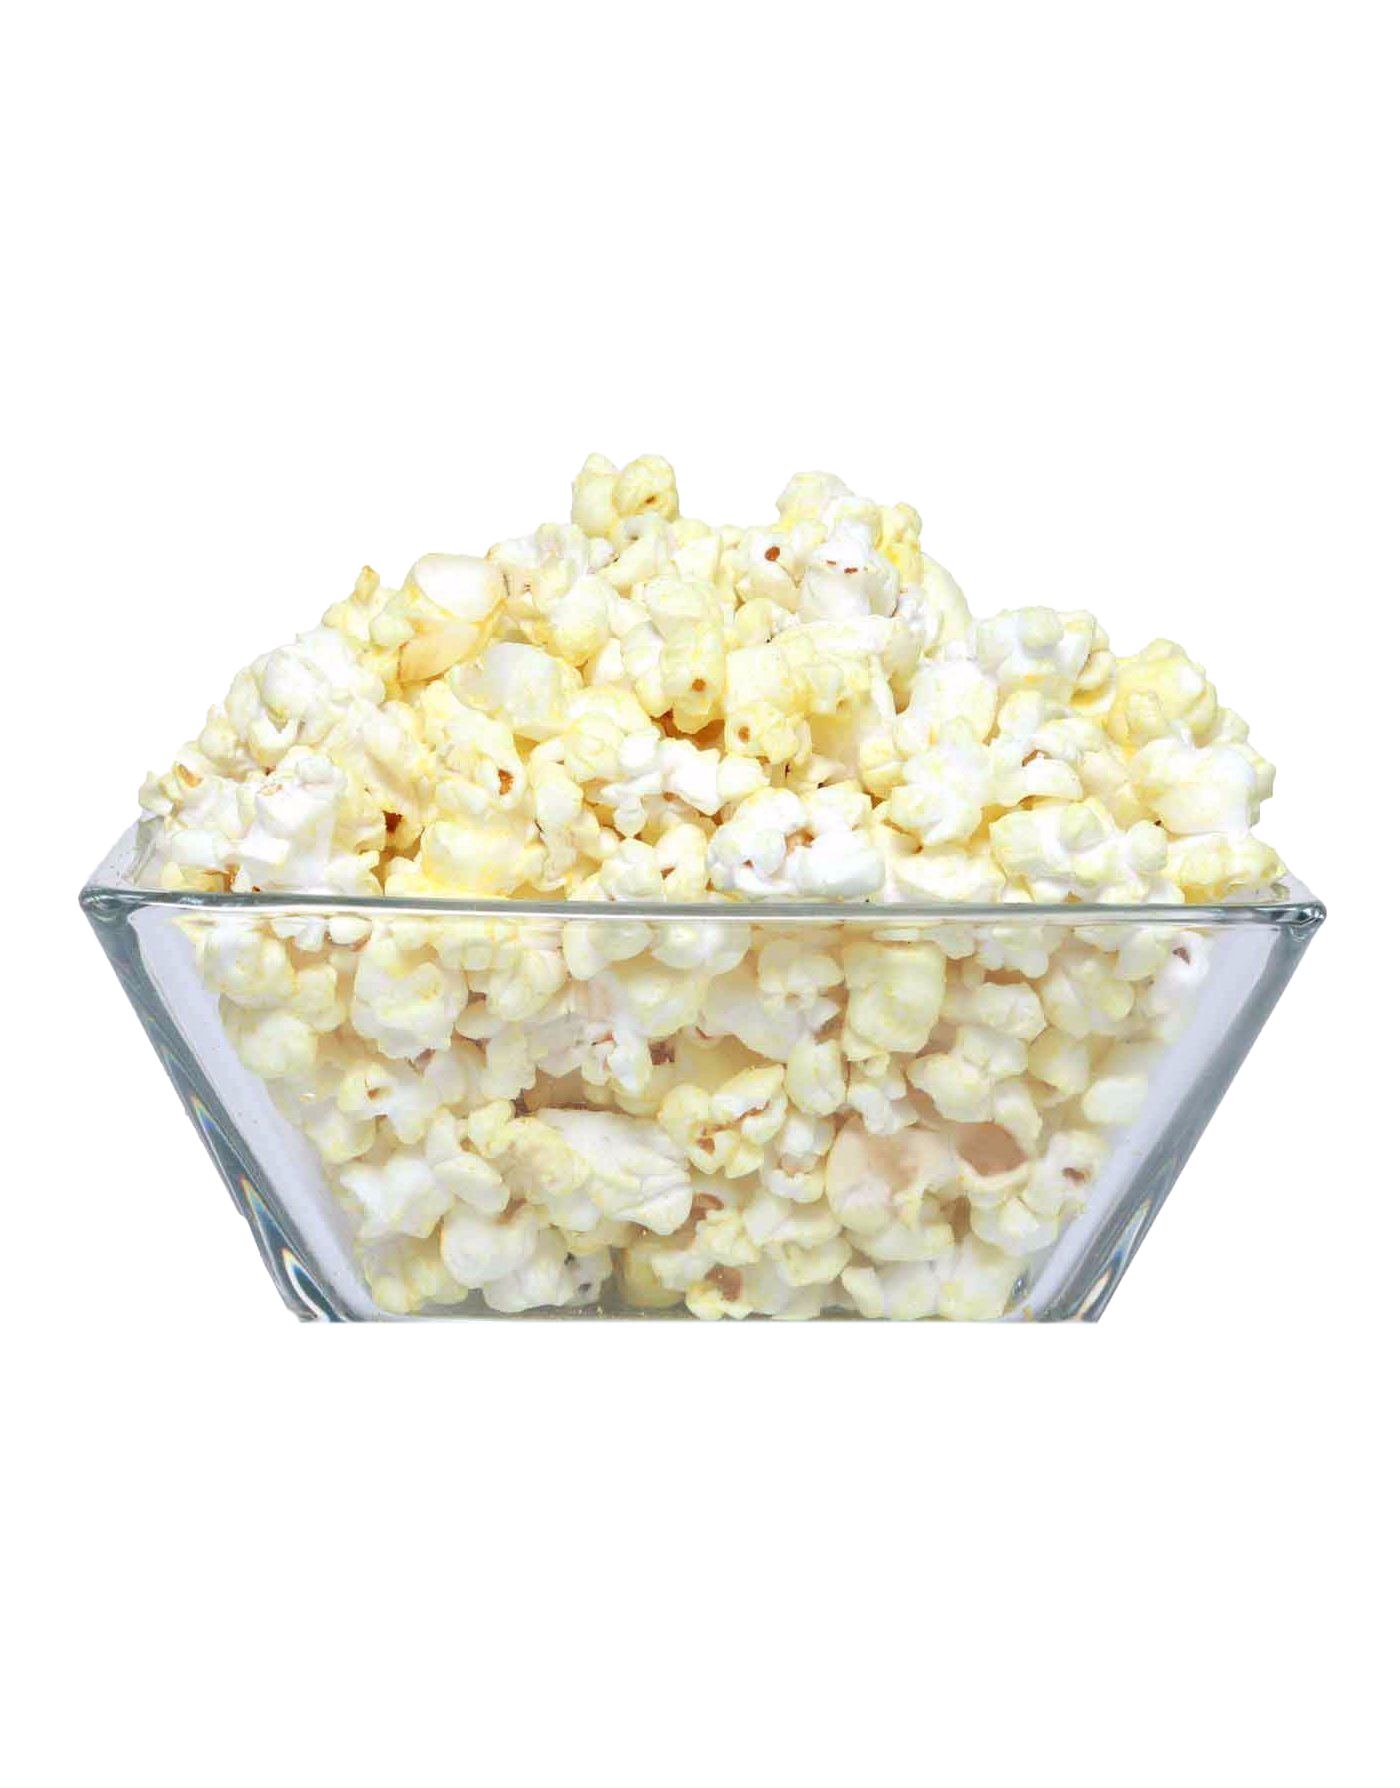 Popcorn Transparent Image